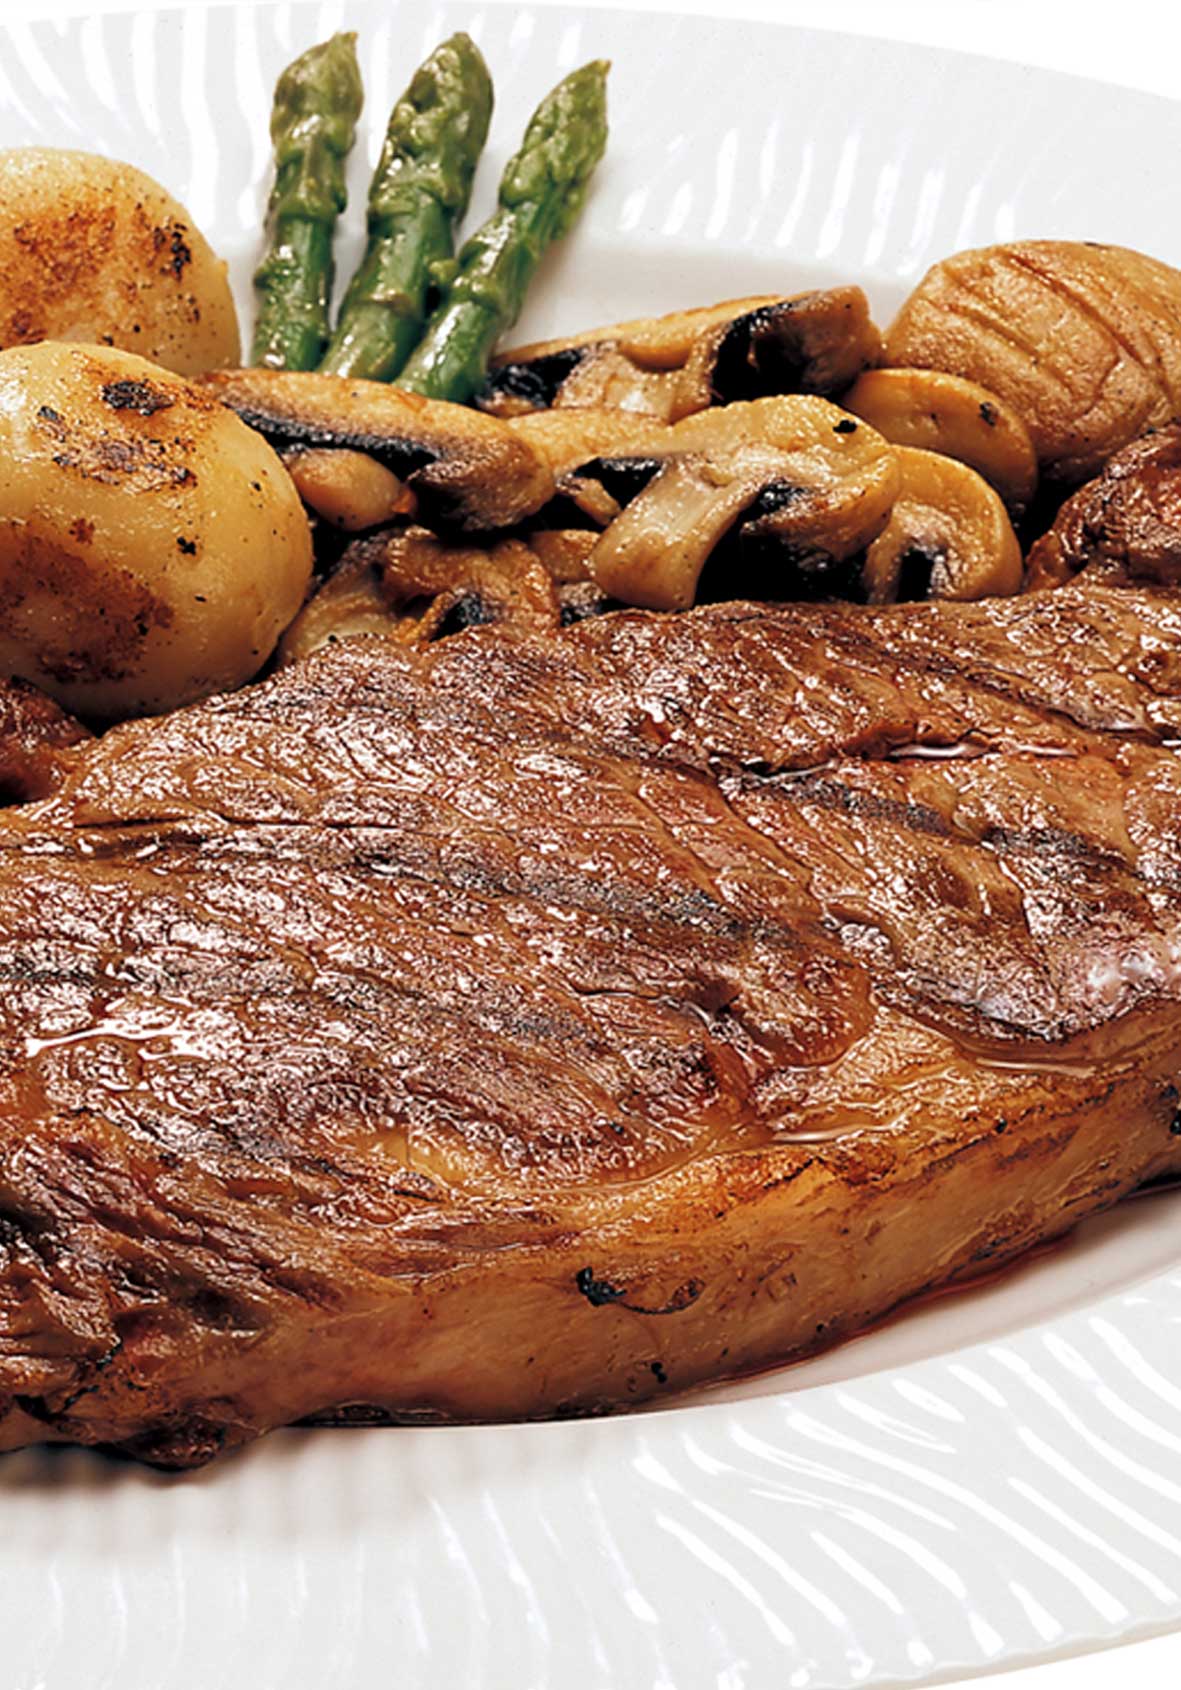 bison steak on a plate